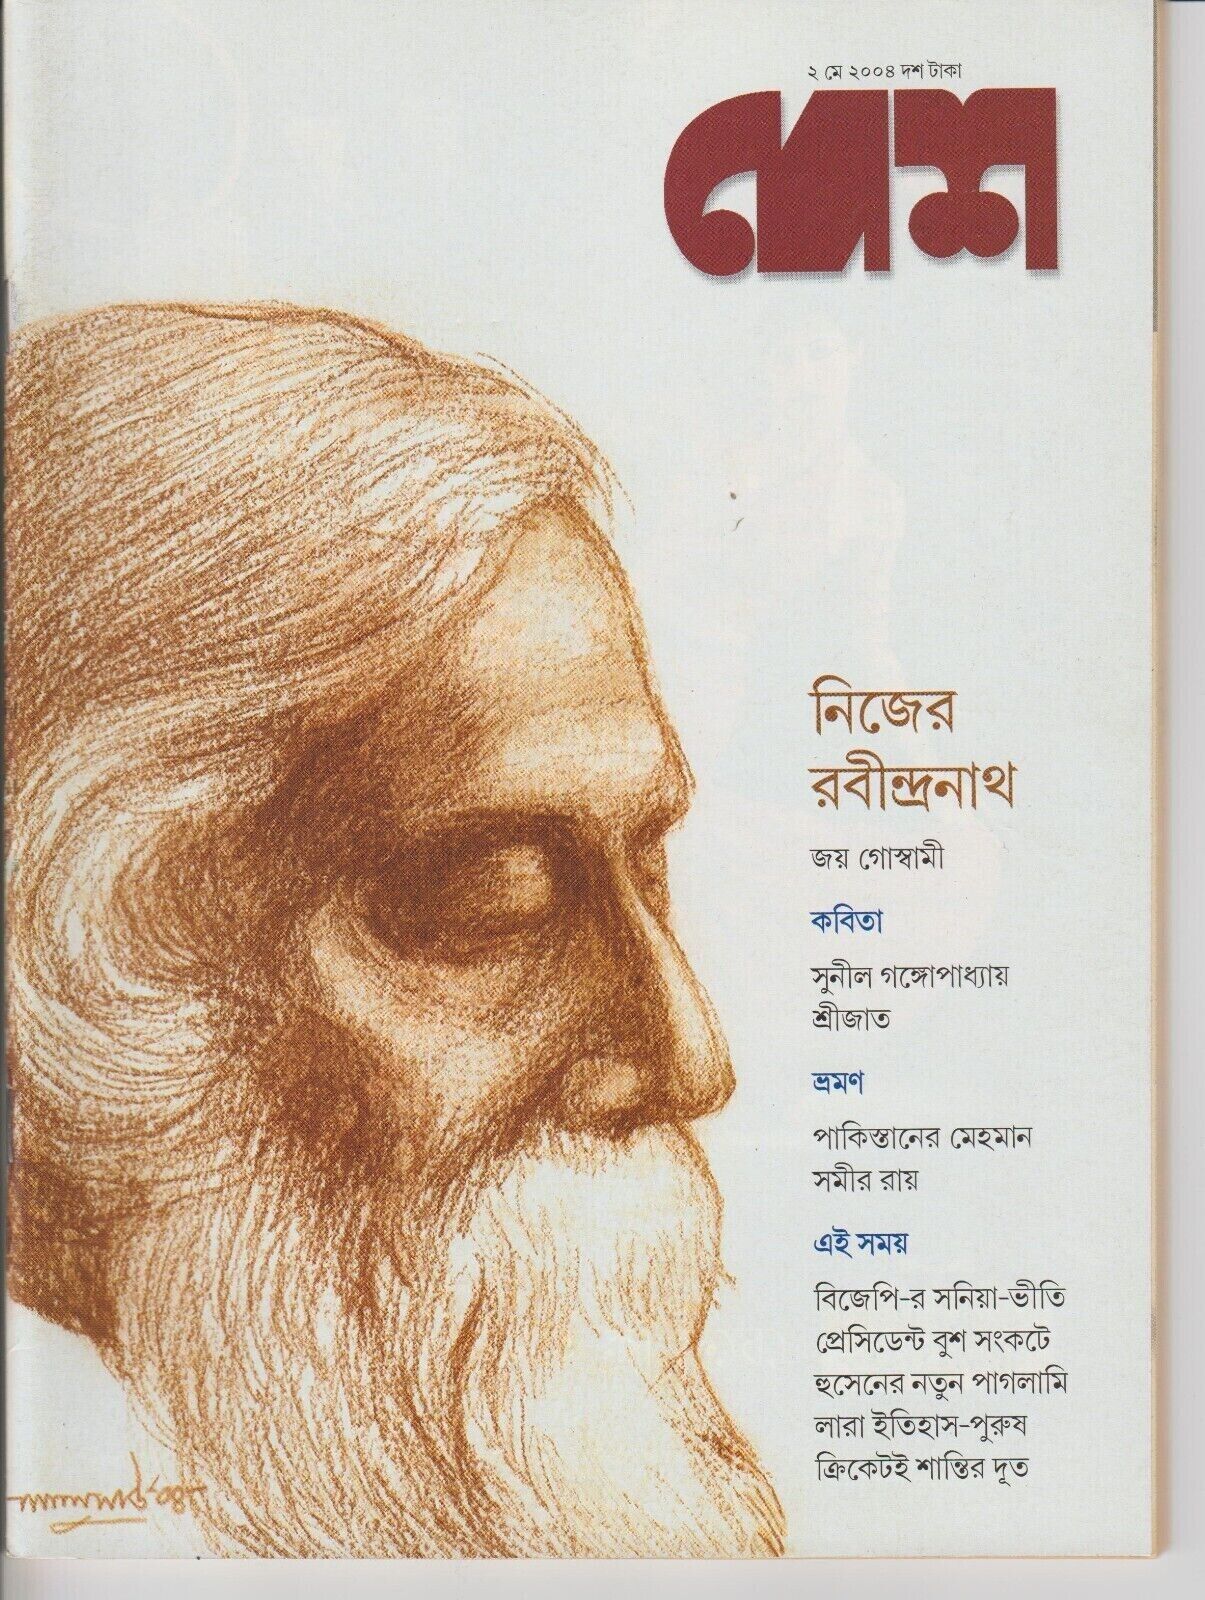 2 Desh magazines, Rabindranath Tagore Issue, 2004, Bengali Bangladesh